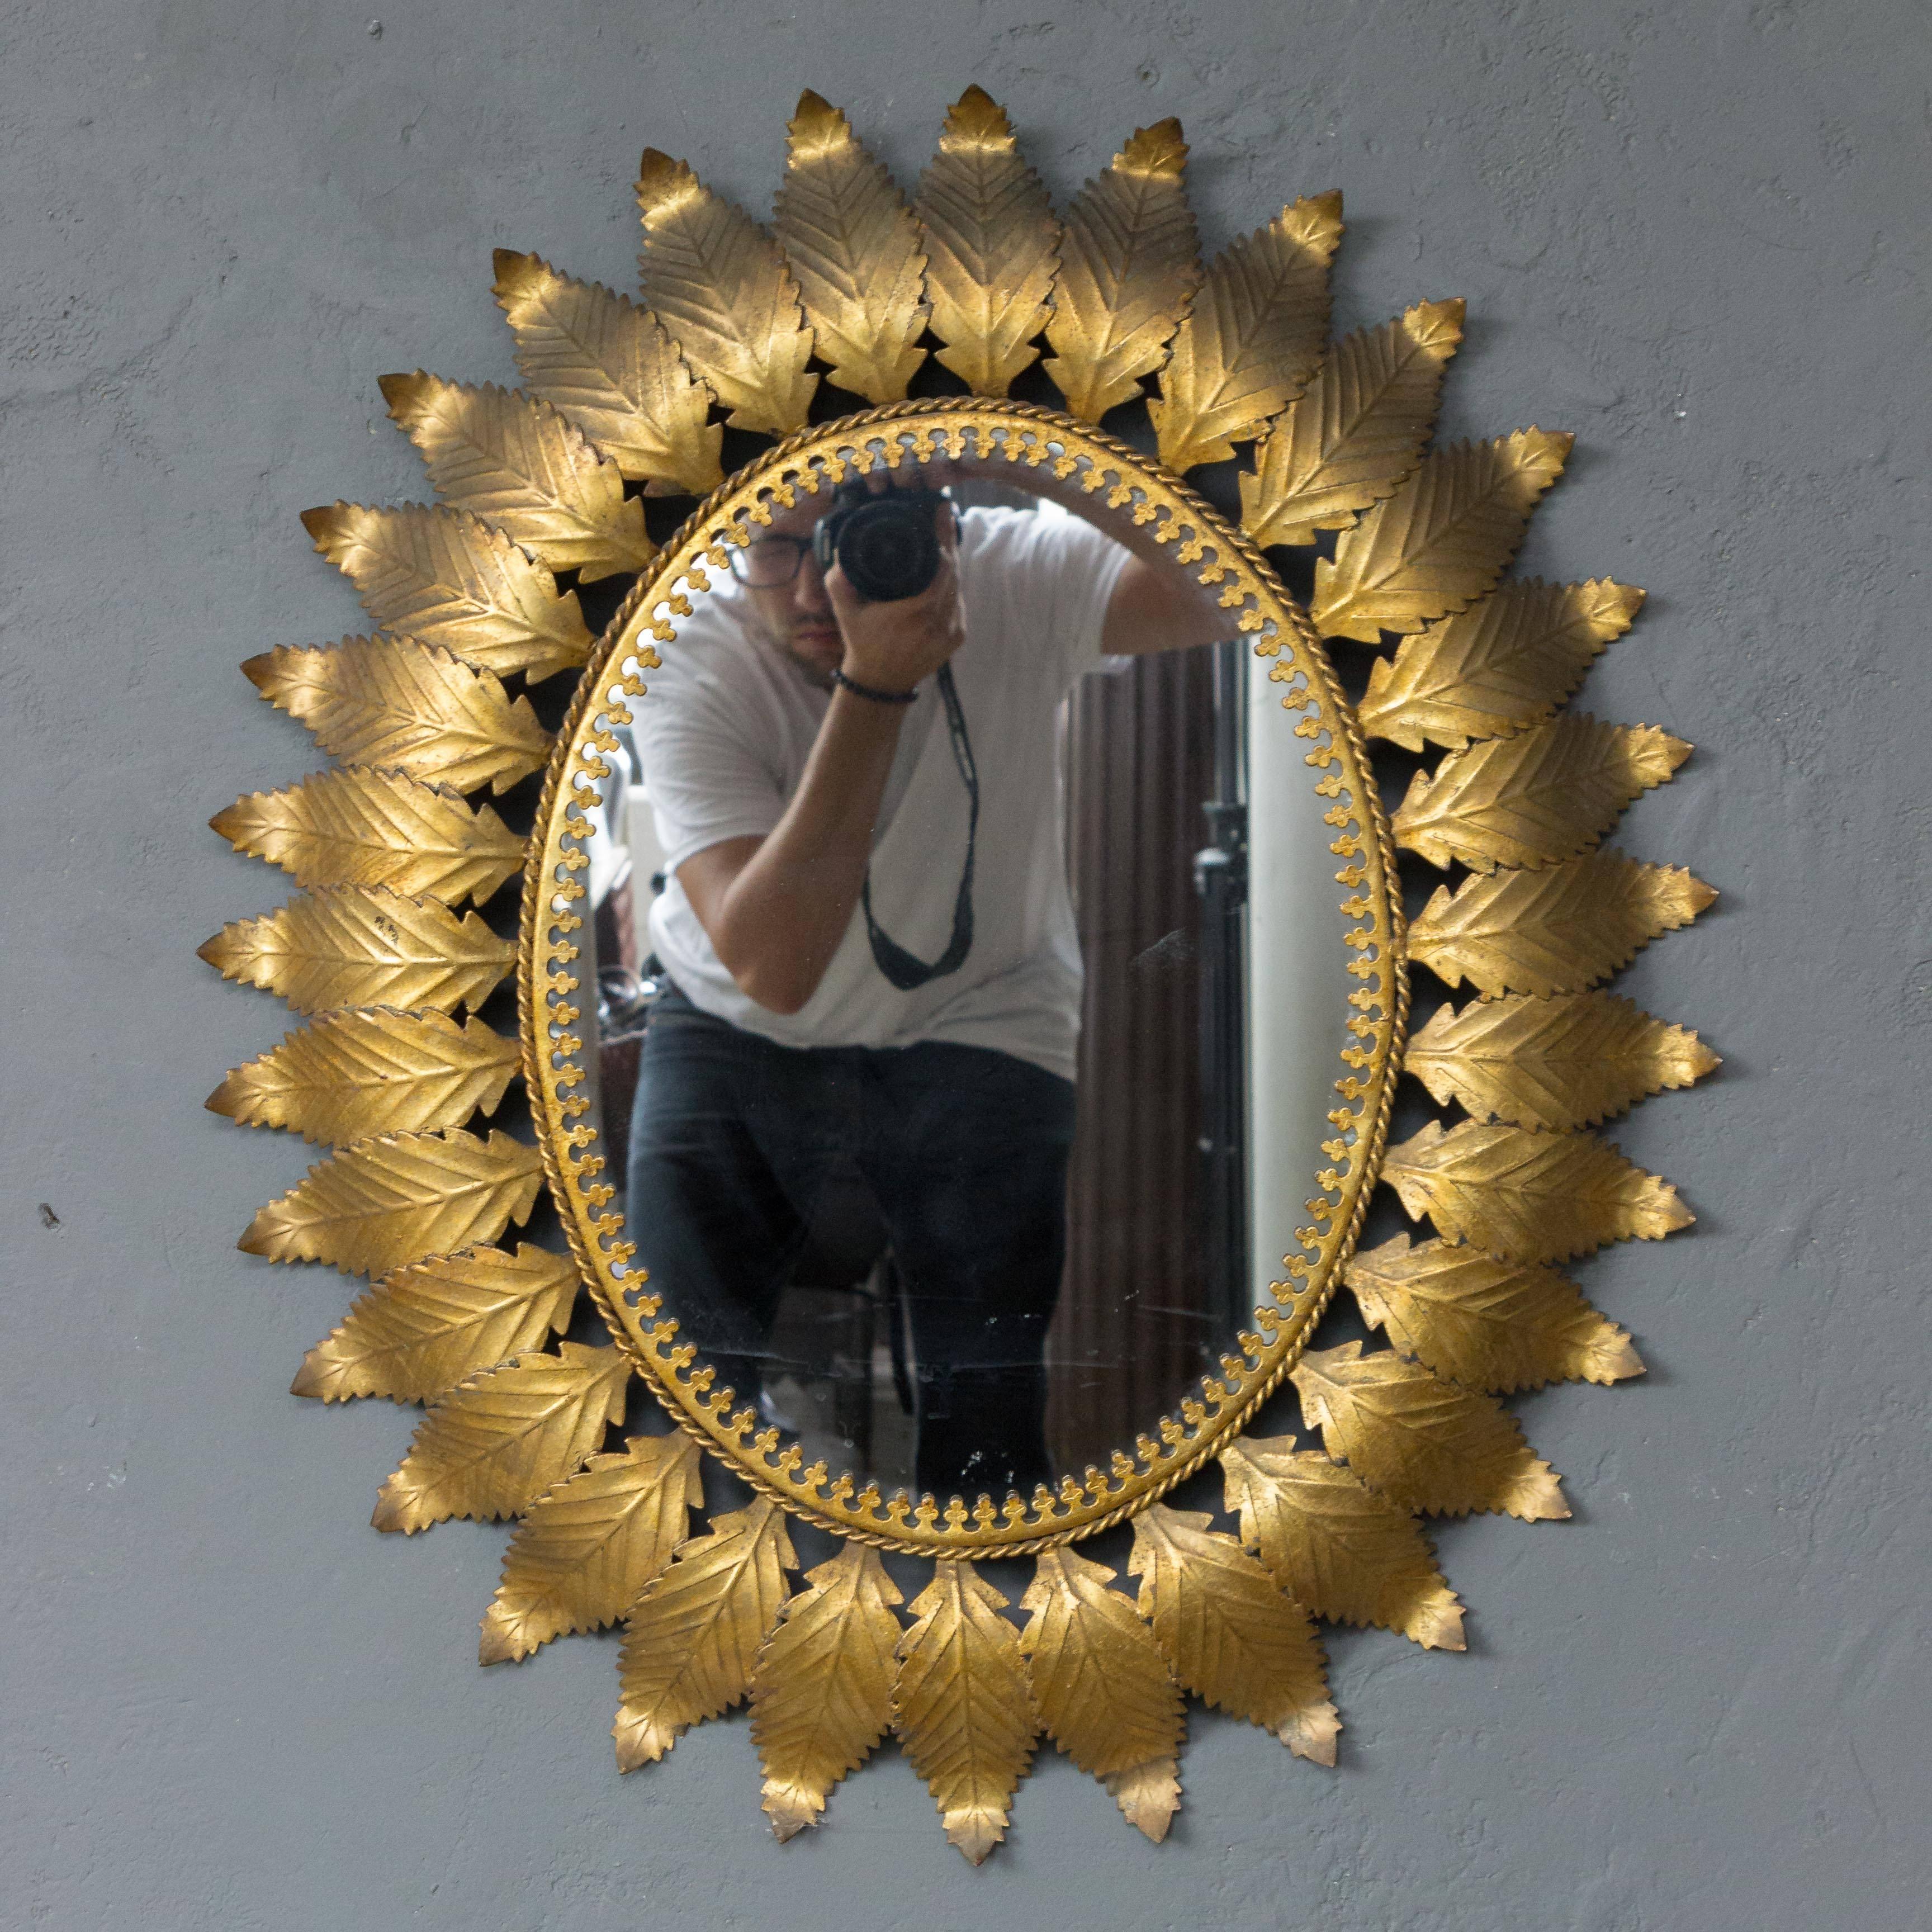 Oval gilt metal mirror with leaf design rays.